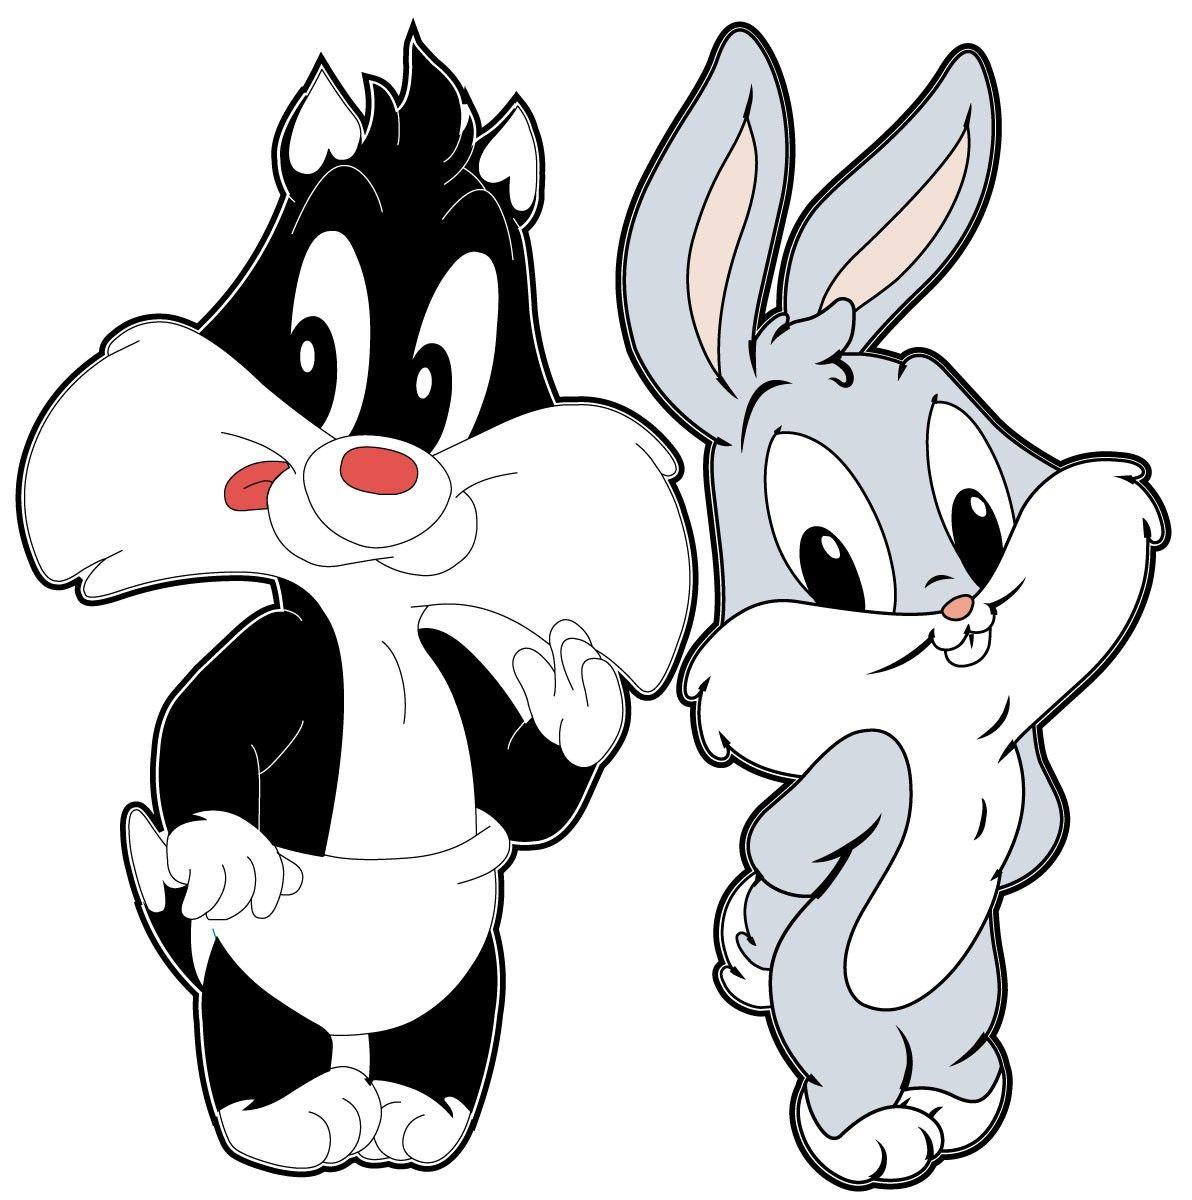 Free Image Of Cartoon Bunnies, Download Free Clip Art, Free Clip